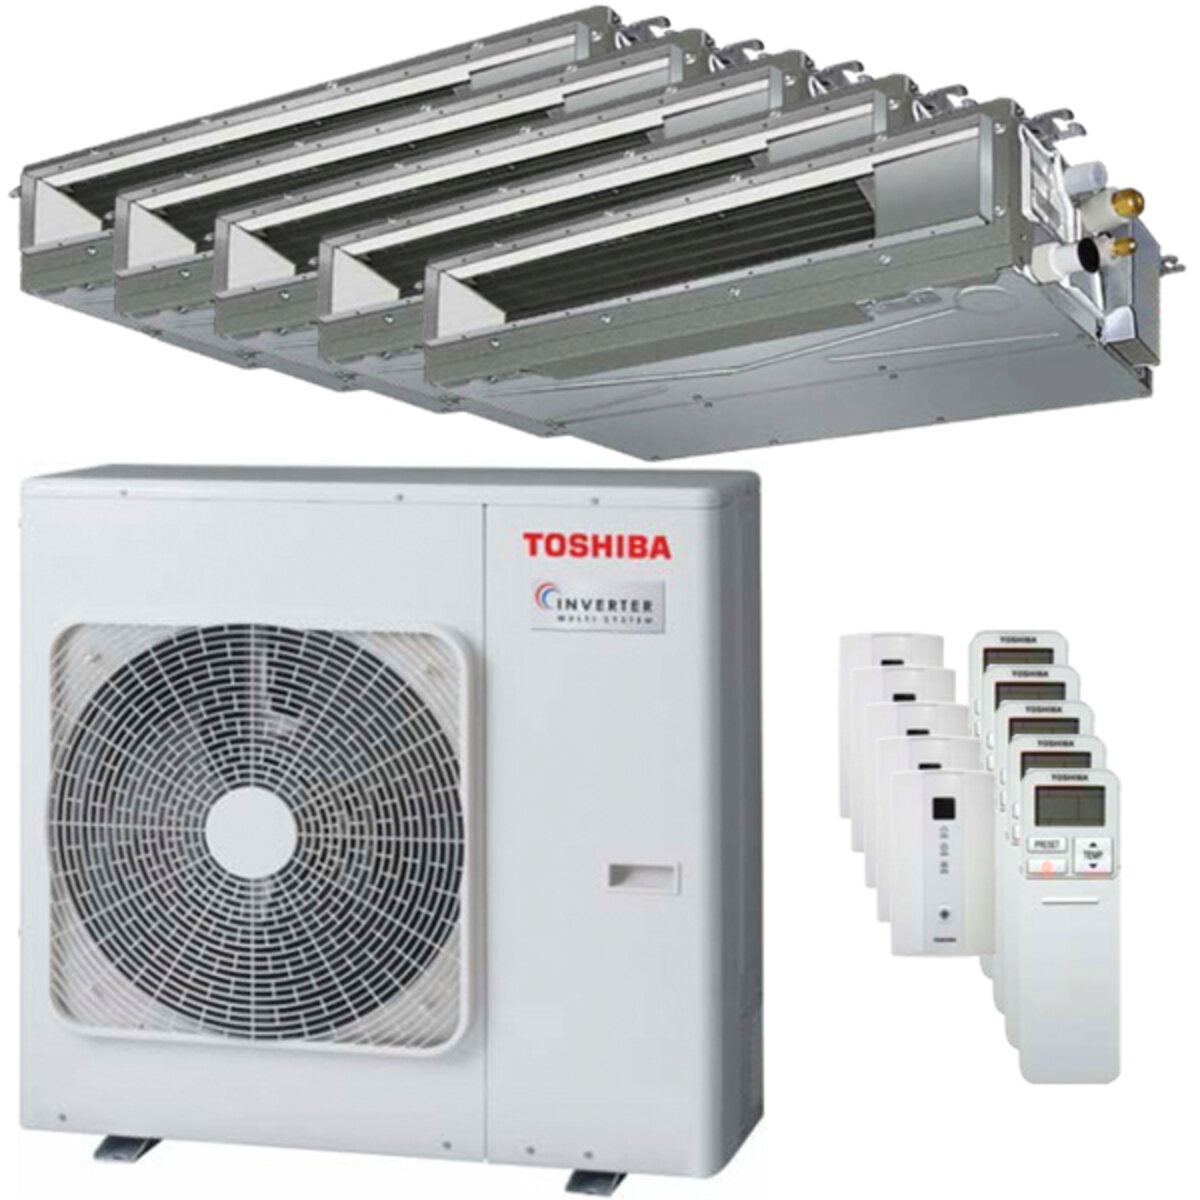 Toshiba Ductable Air Conditioner U2 penta split 7000 + 9000 + 9000 + 9000 + 22000 BTU inverter A ++ outdoor unit 10.0 kW